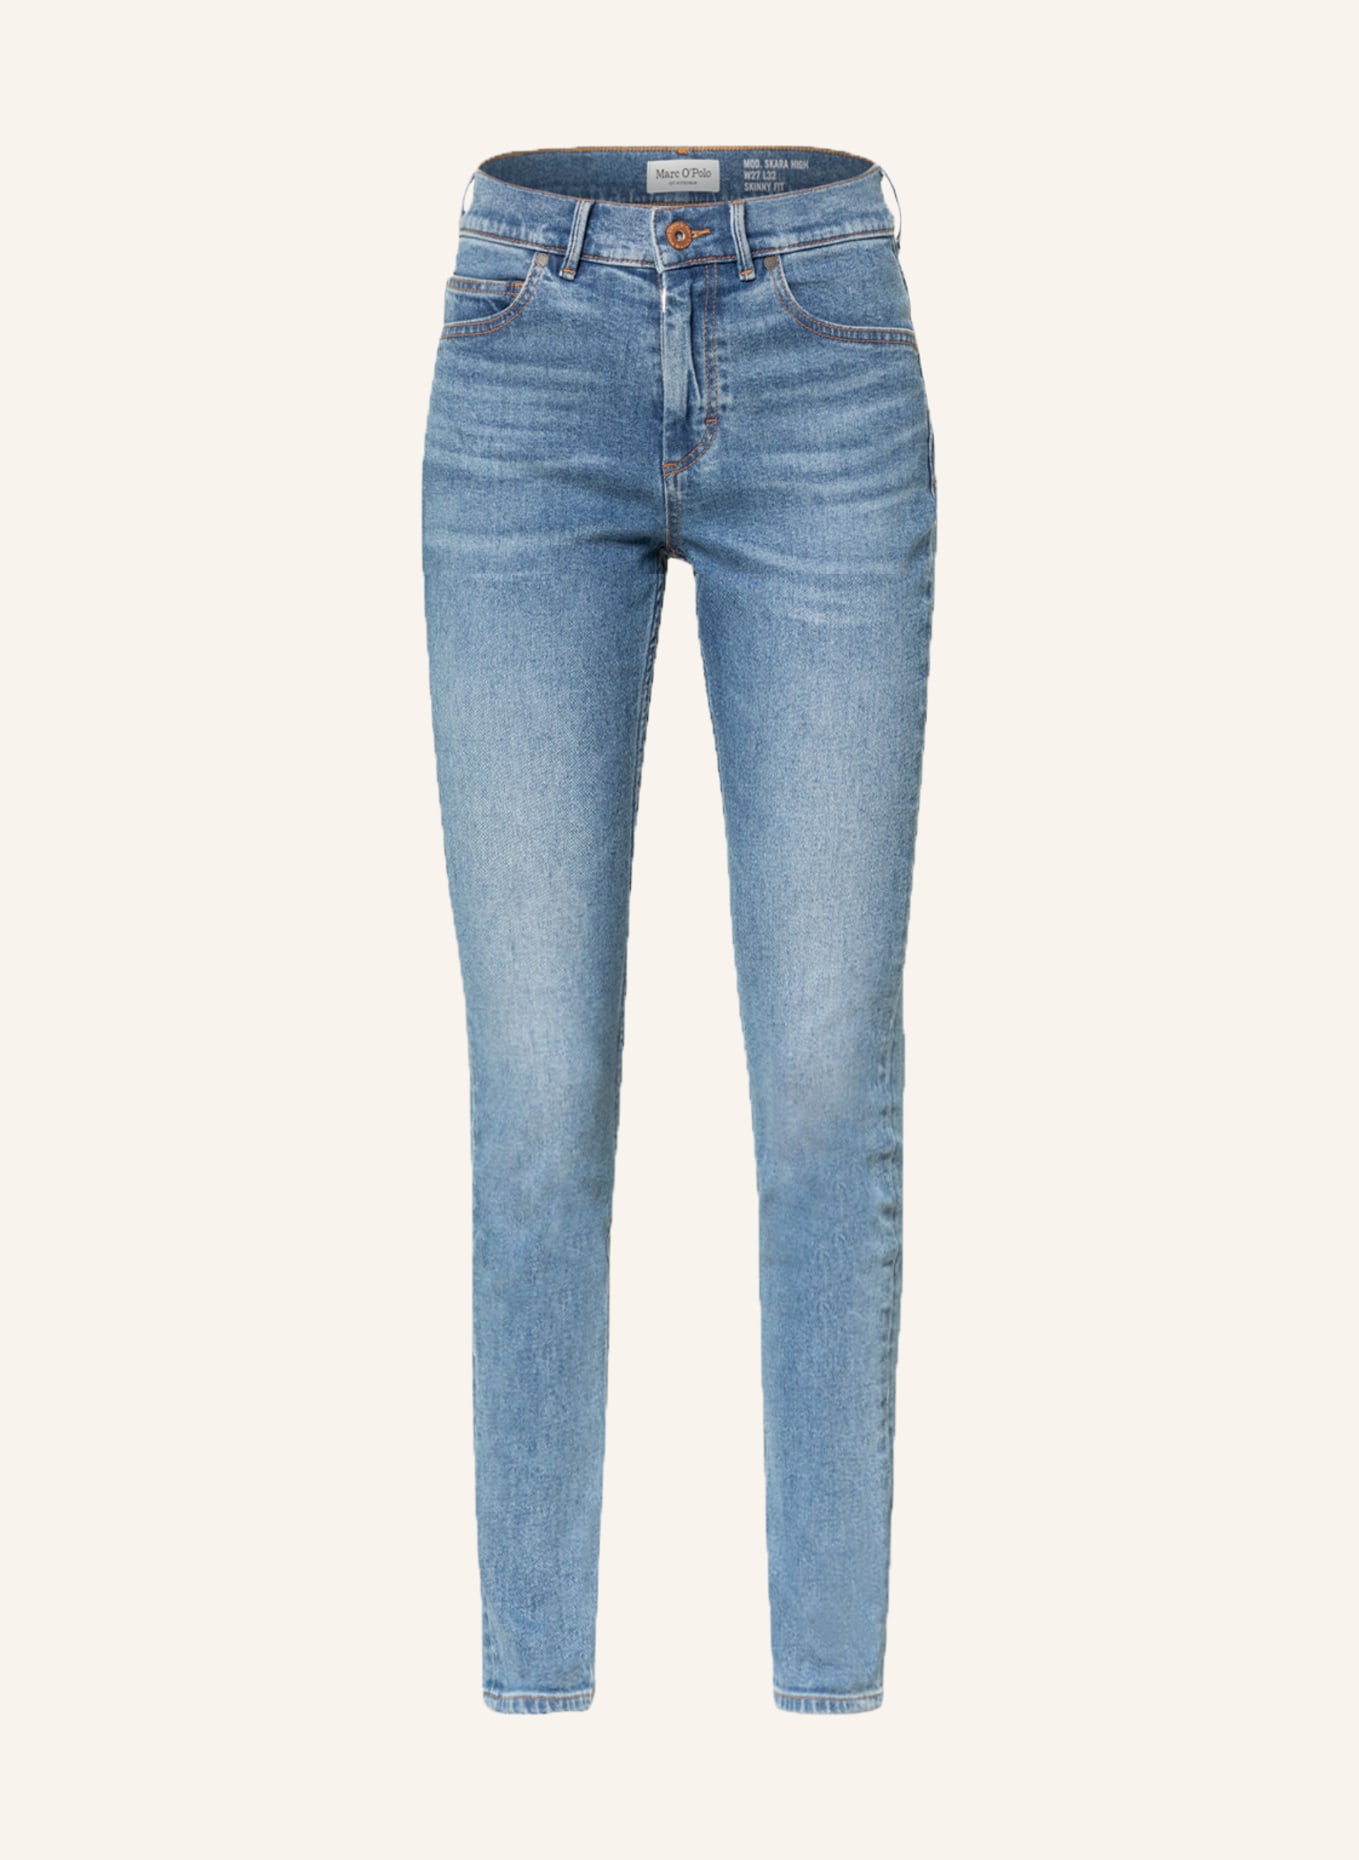 Marc O'Polo Skinny Jeans, Farbe: 023 Dark blue wash (Bild 1)